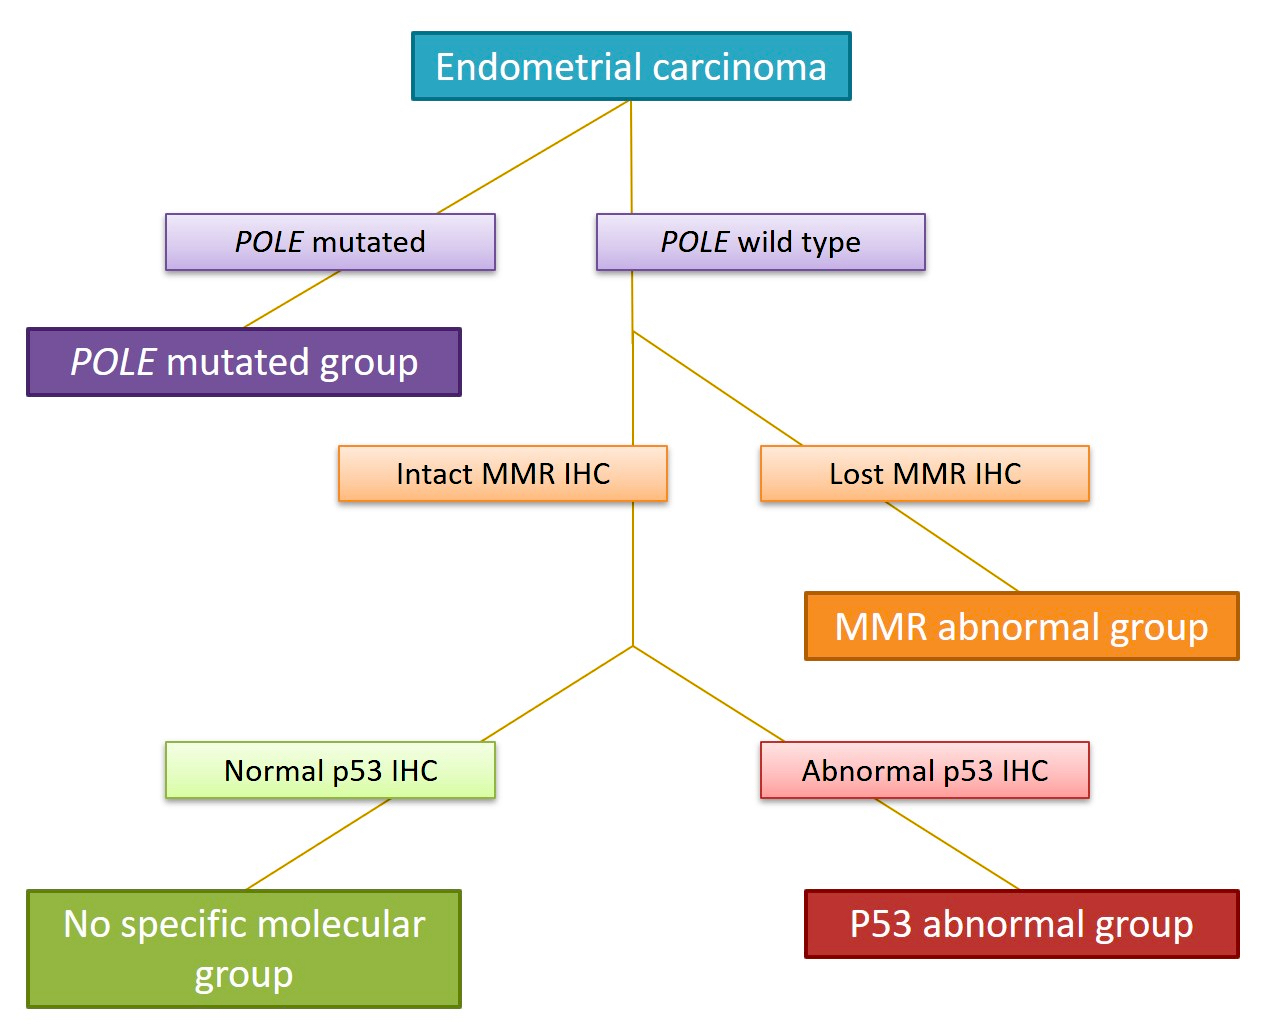 Molecular based classification of endometrial carcinoma